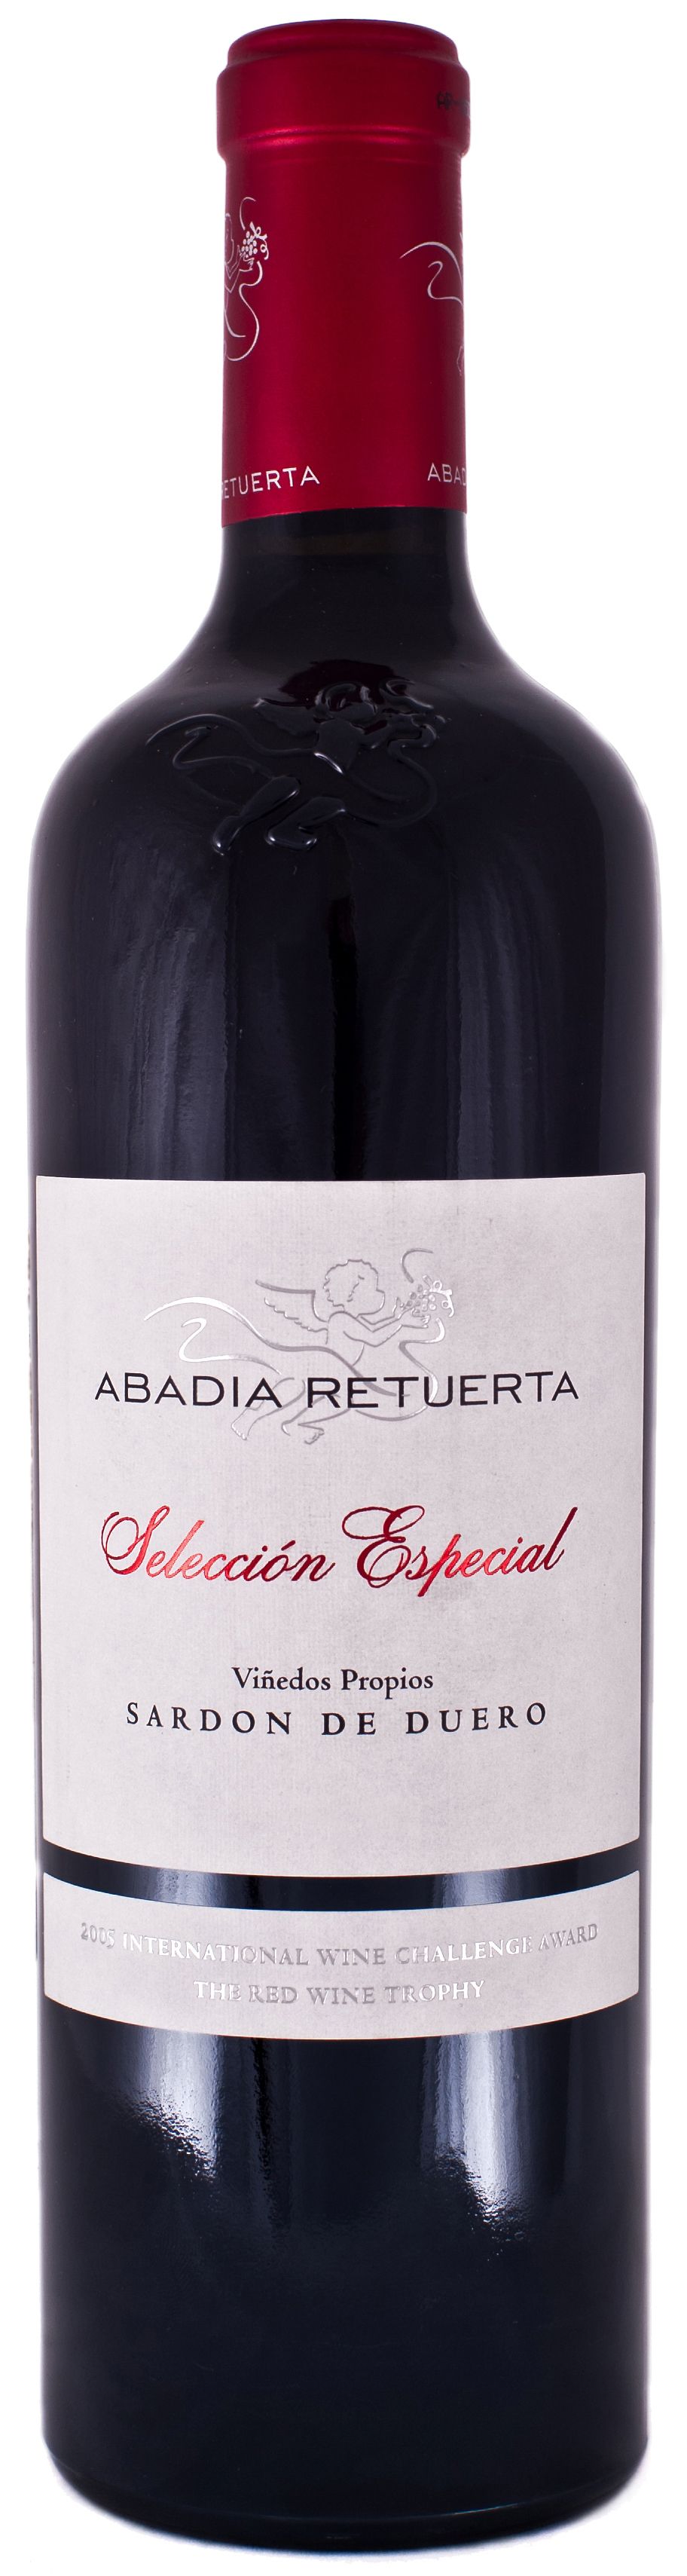 Abadia Retuerta, Seleccion Especial, 2015